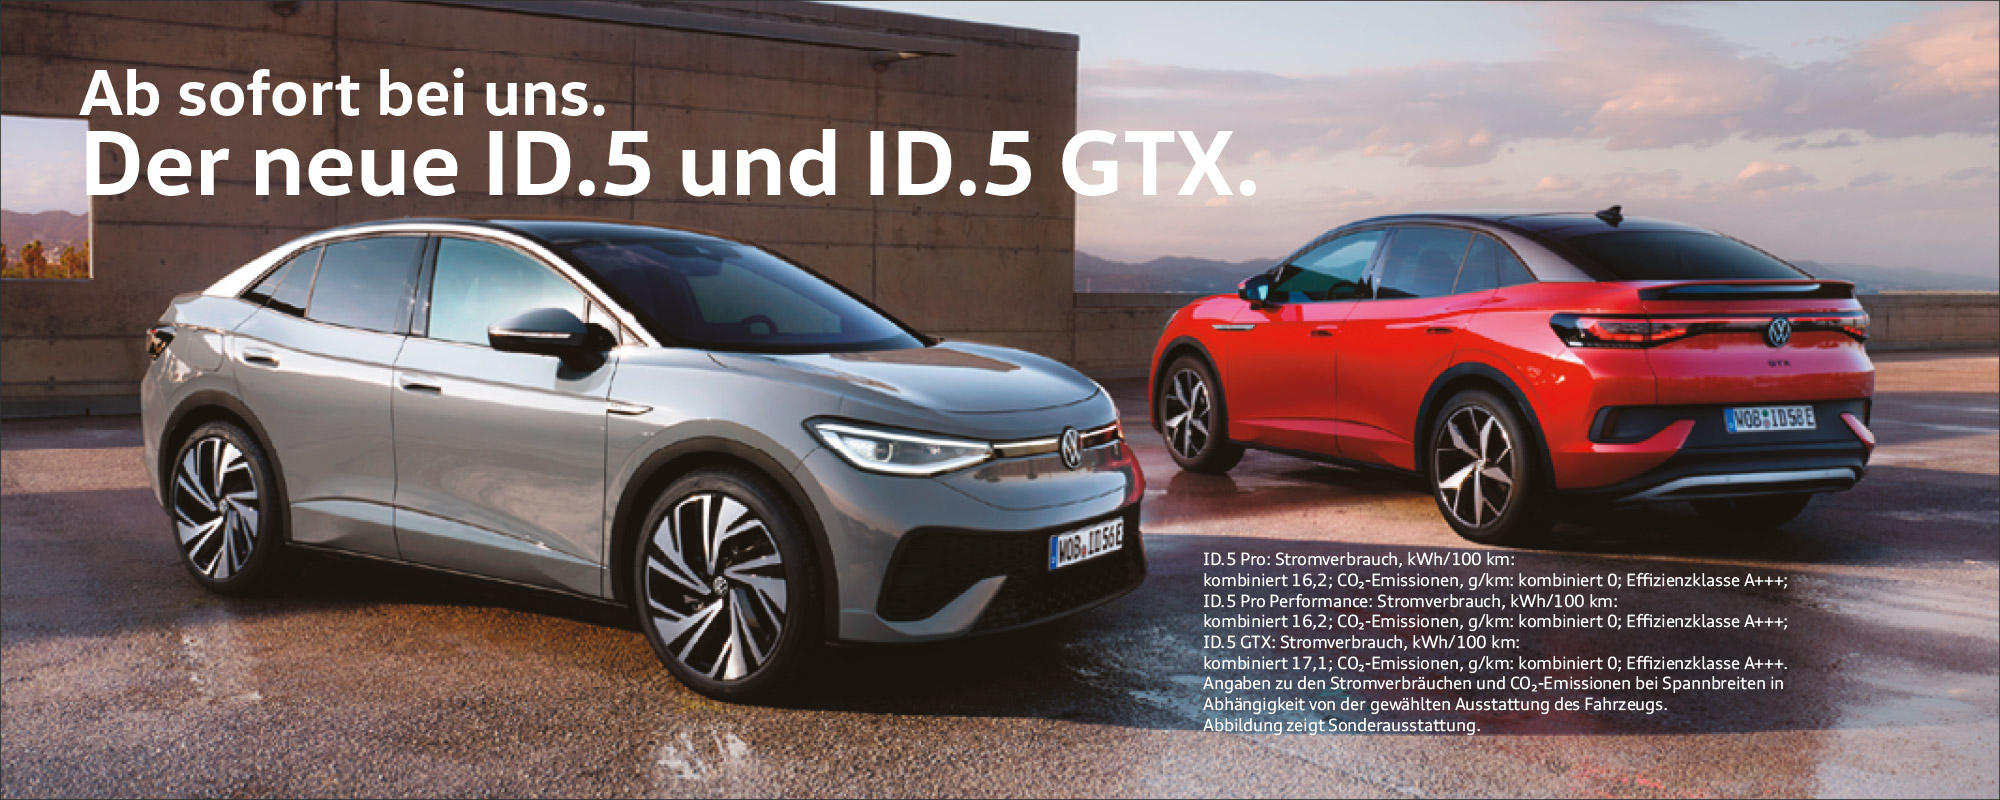 VW ID.5 und ID.5 GTX